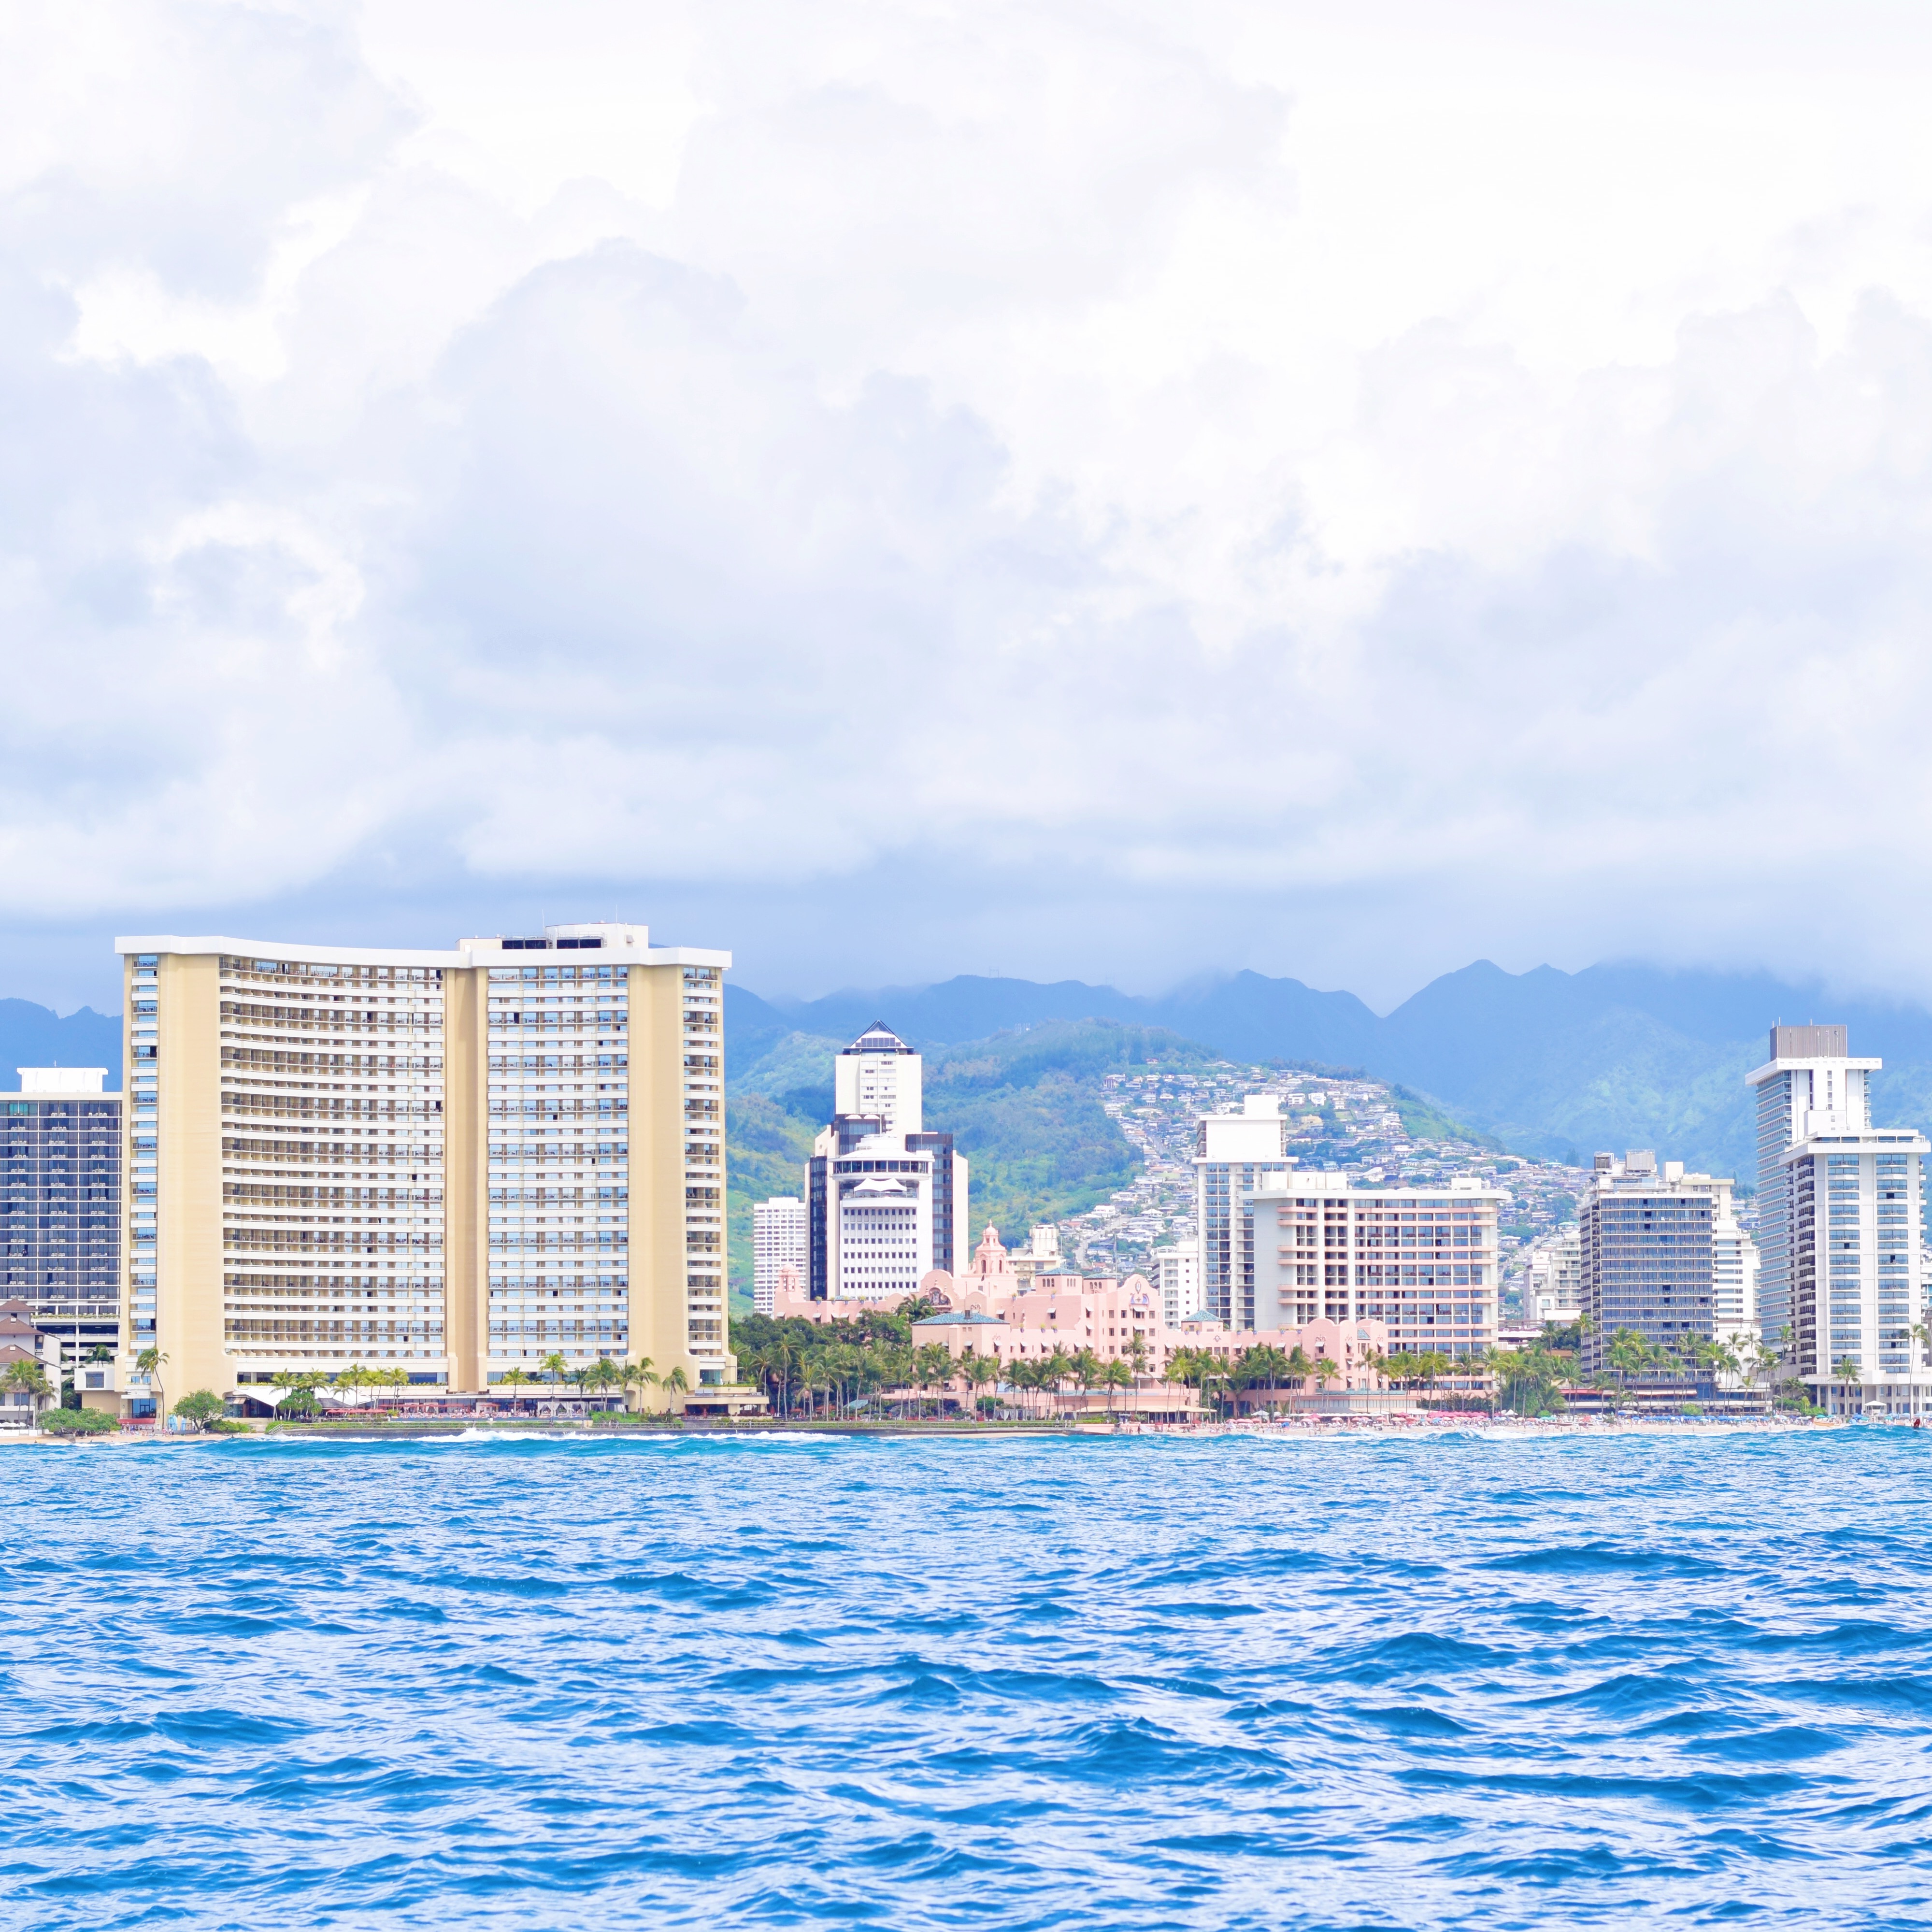 Top 10 Activities In Waikiki